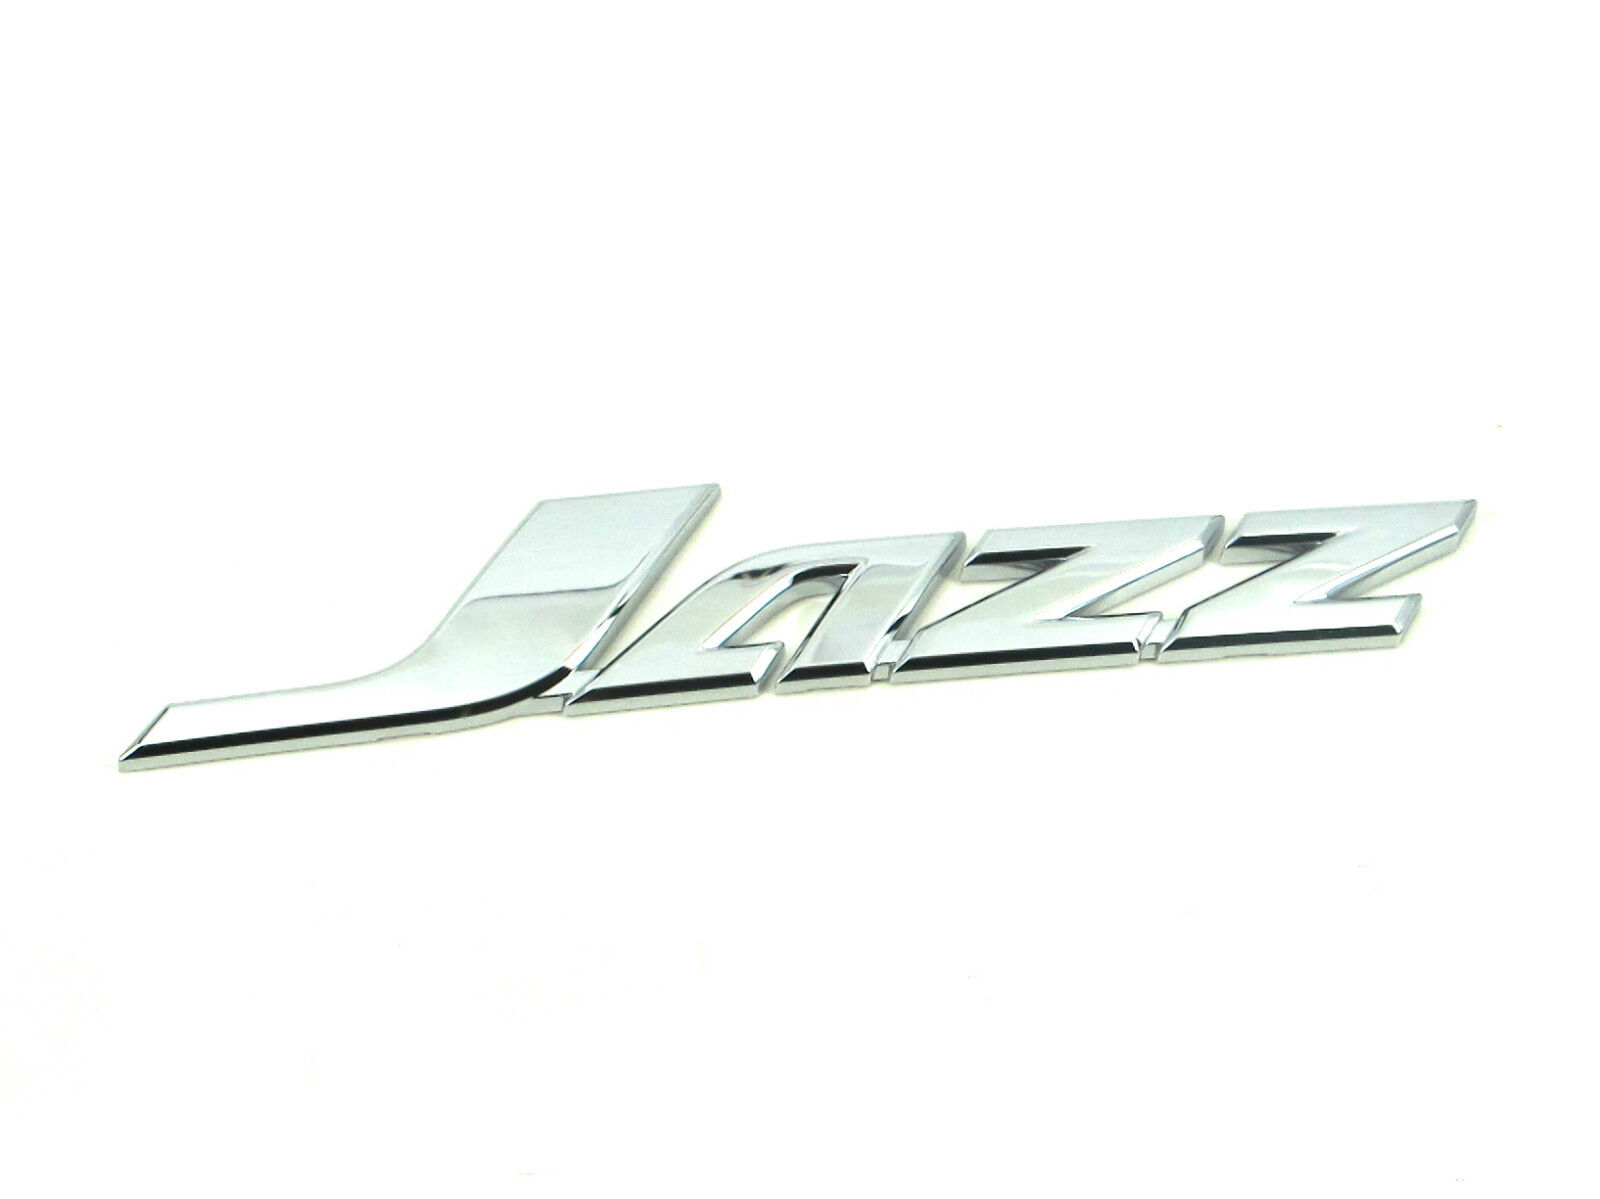 Genuine New HONDA JAZZ TAILGATE BADGE Boot Emblem 2008-2013 Mk2 1.2 1.3 1.4i